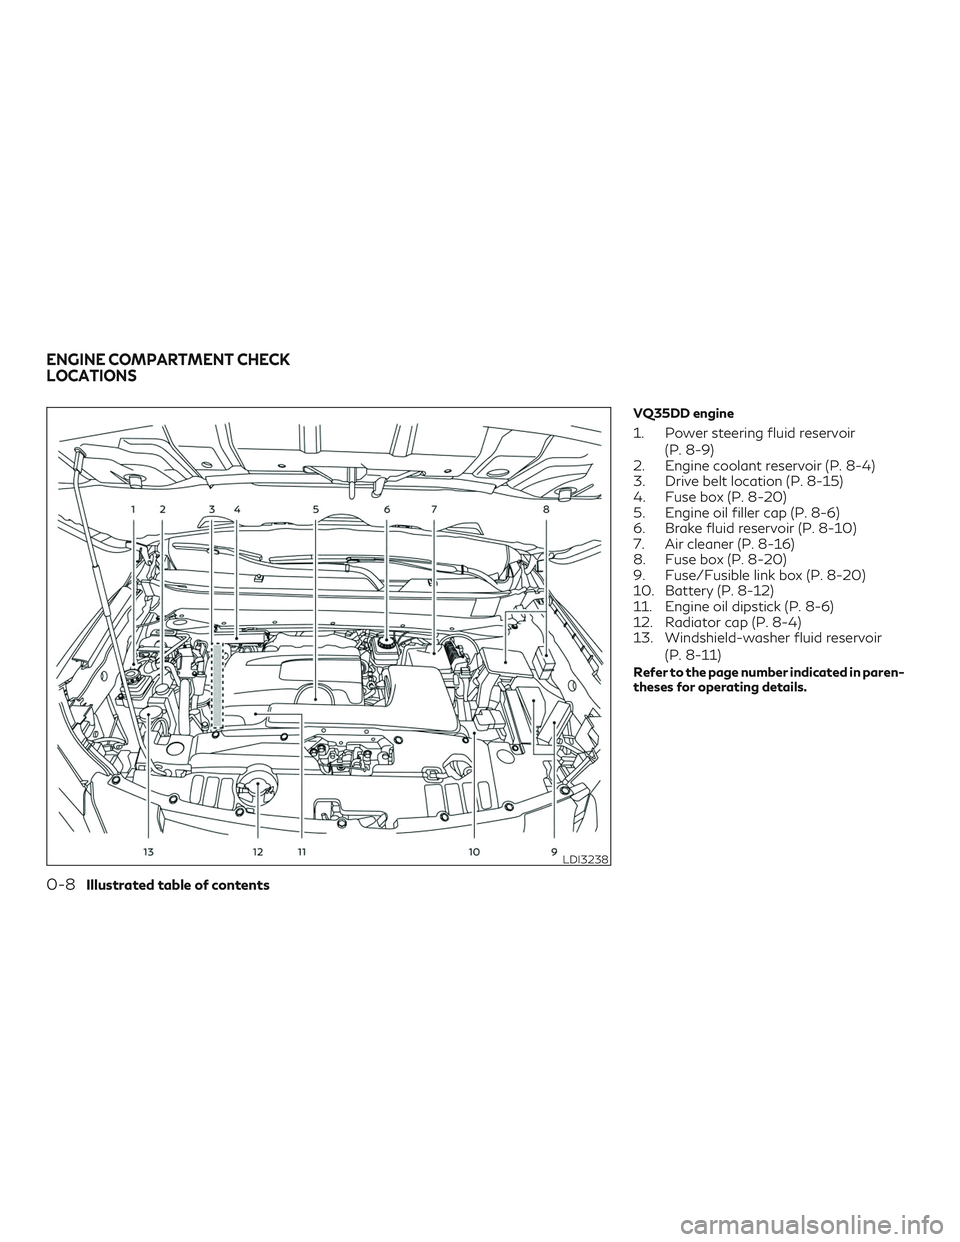 INFINITI QX60 2019 User Guide VQ35DD engine
1. Power steering fluid reservoir(P. 8-9)
2. Engine coolant reservoir (P. 8-4)
3. Drive belt location (P. 8-15)
4. Fuse box (P. 8-20)
5. Engine oil filler cap (P. 8-6)
6. Brake fluid res